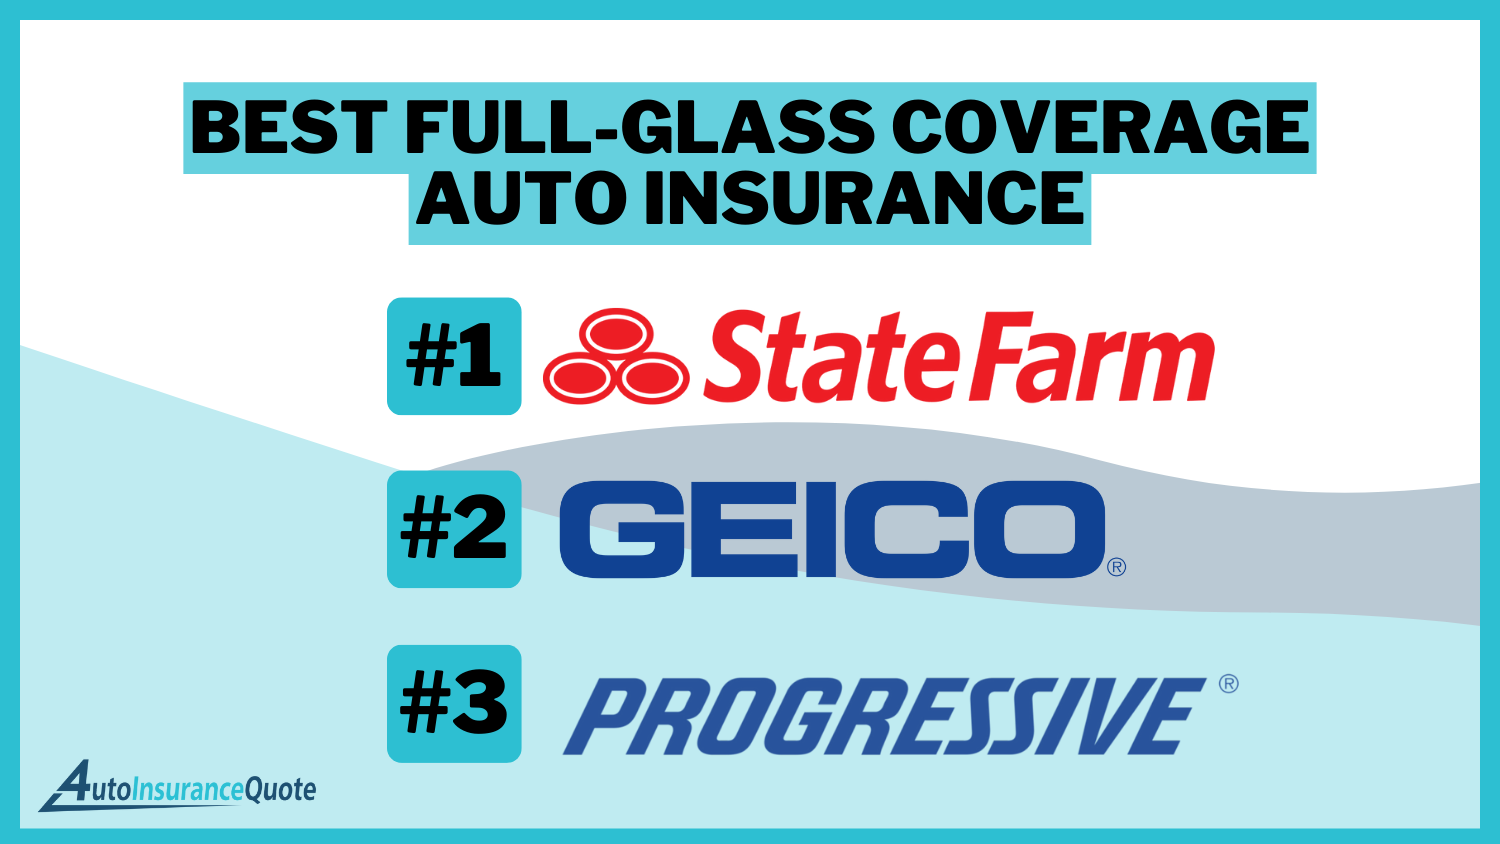 Best Full-Glass Coverage Auto Insurance: State Farm, Geico, and Progressive